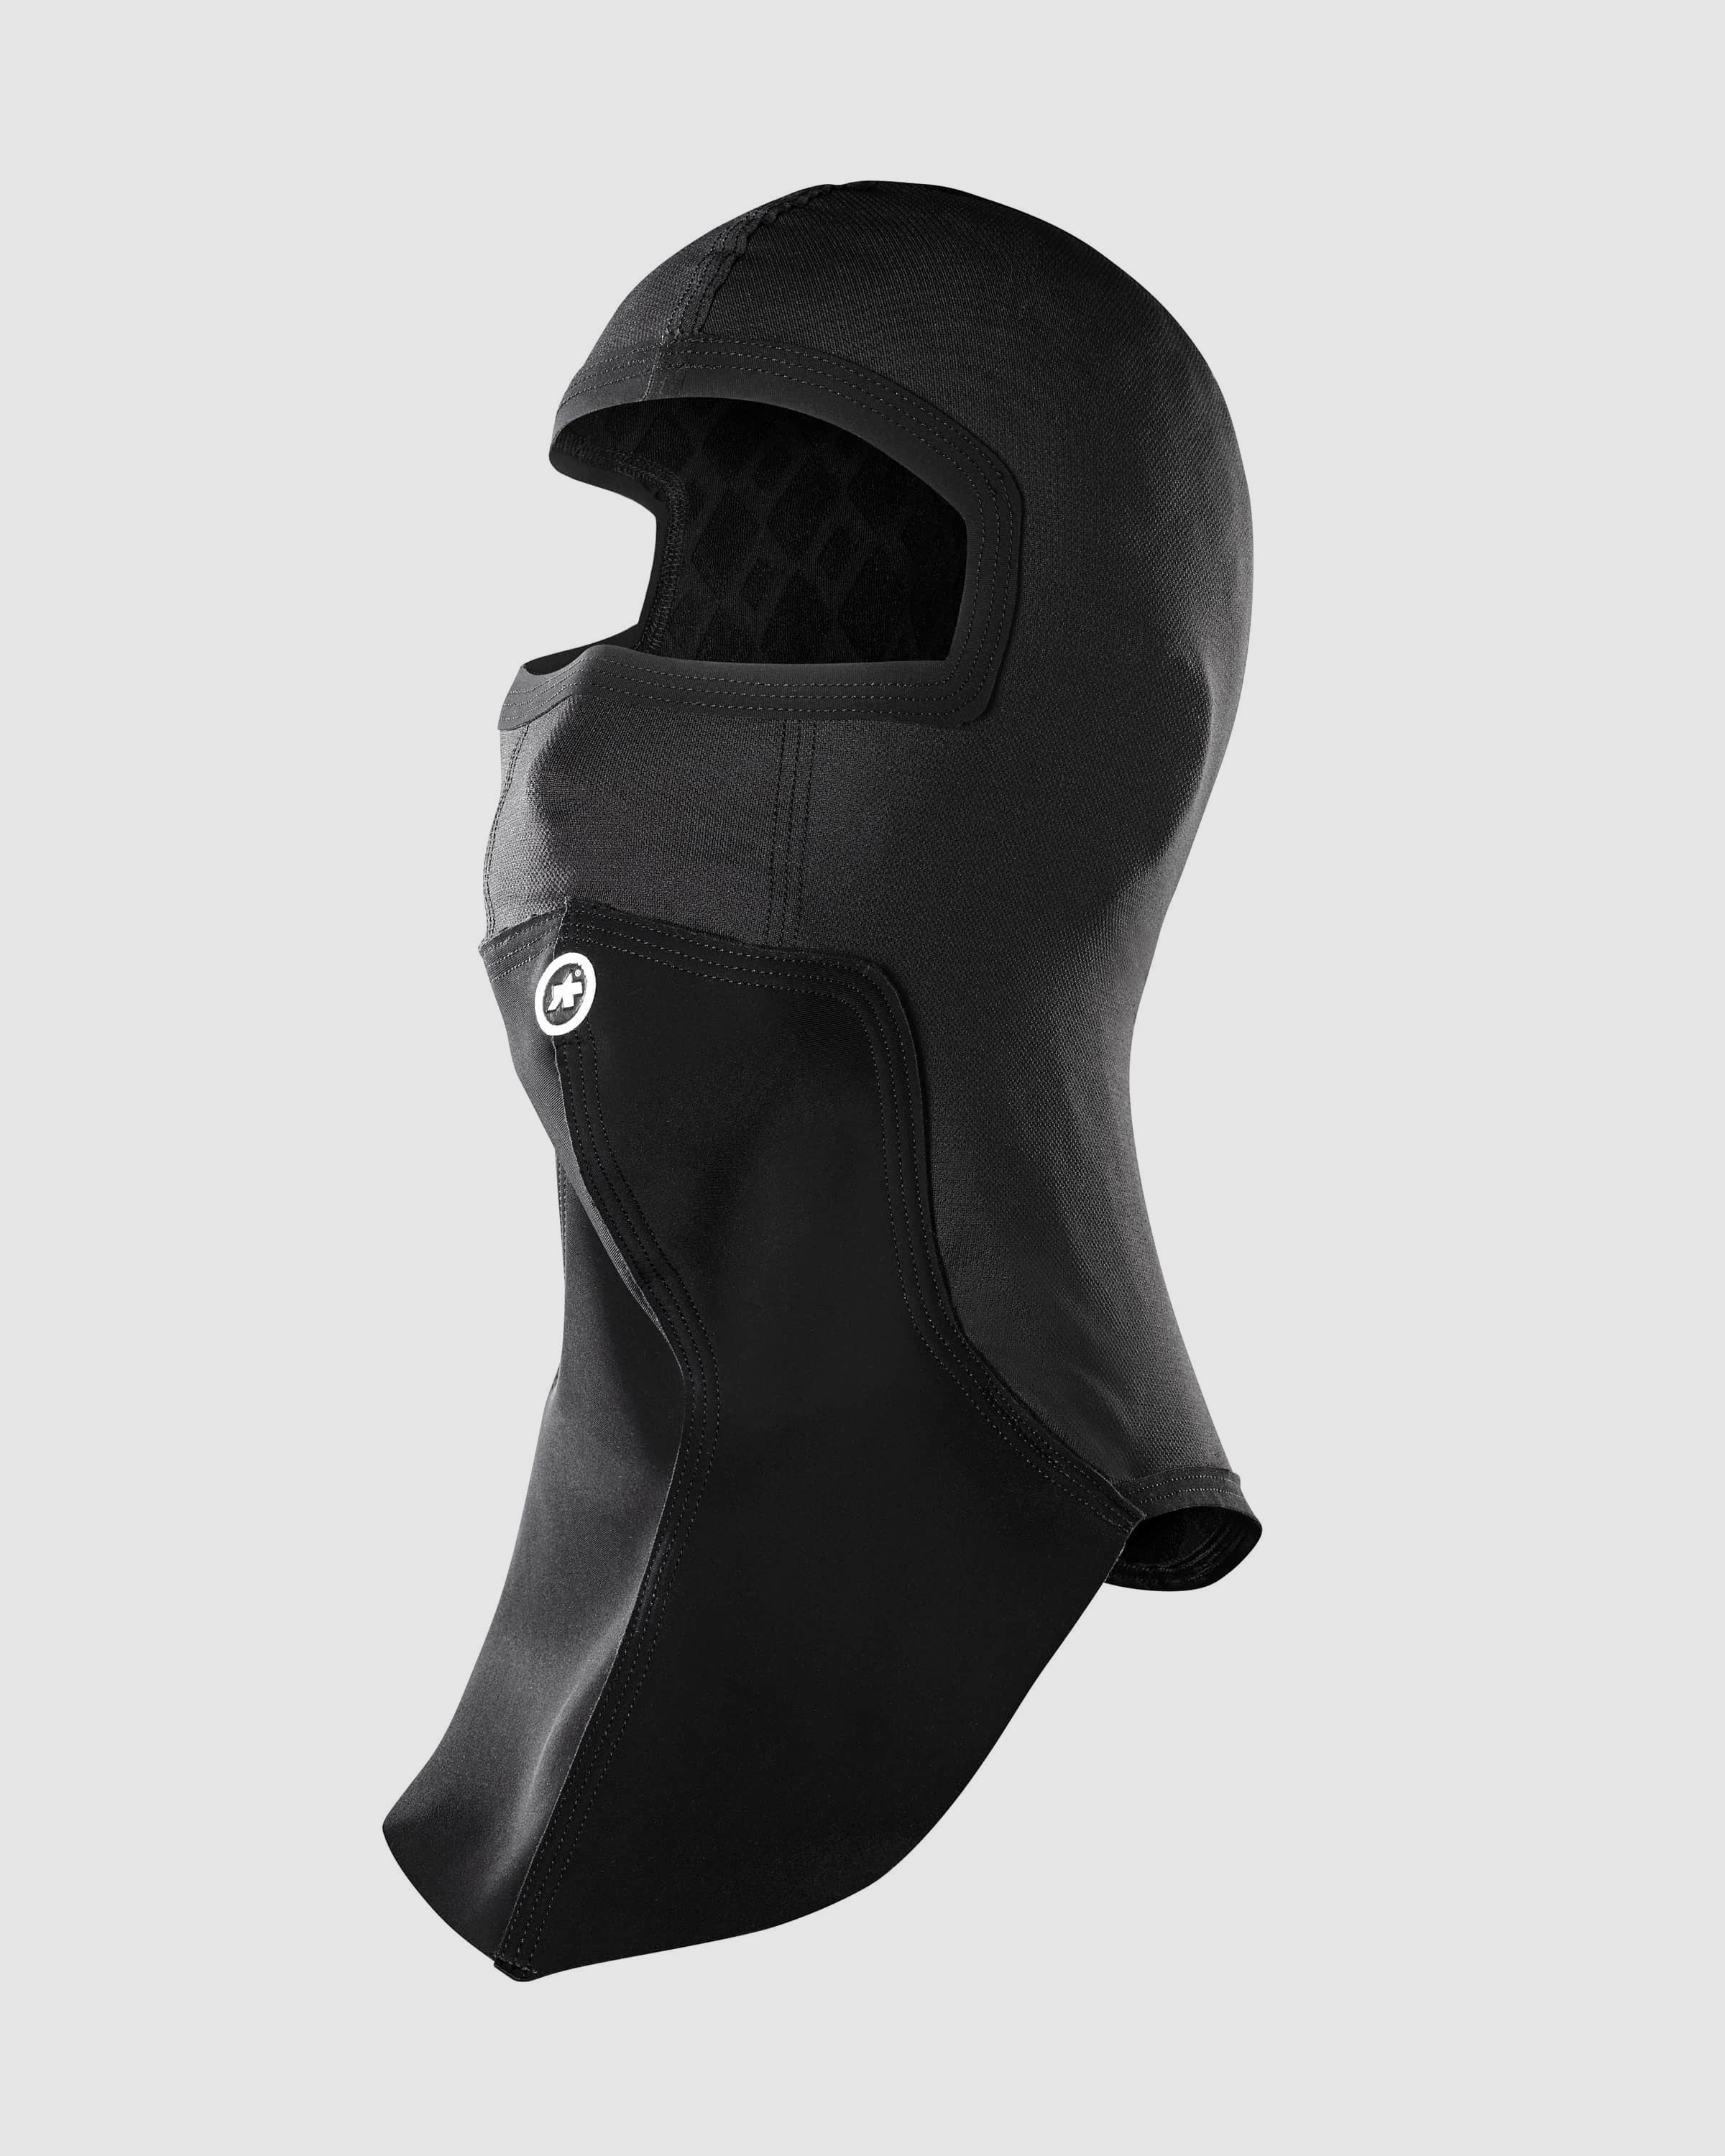 ASSOS Ultraz Winter Face Mask - blackSeries - Cagoule cycliste Hiver -  PlaneteCycle